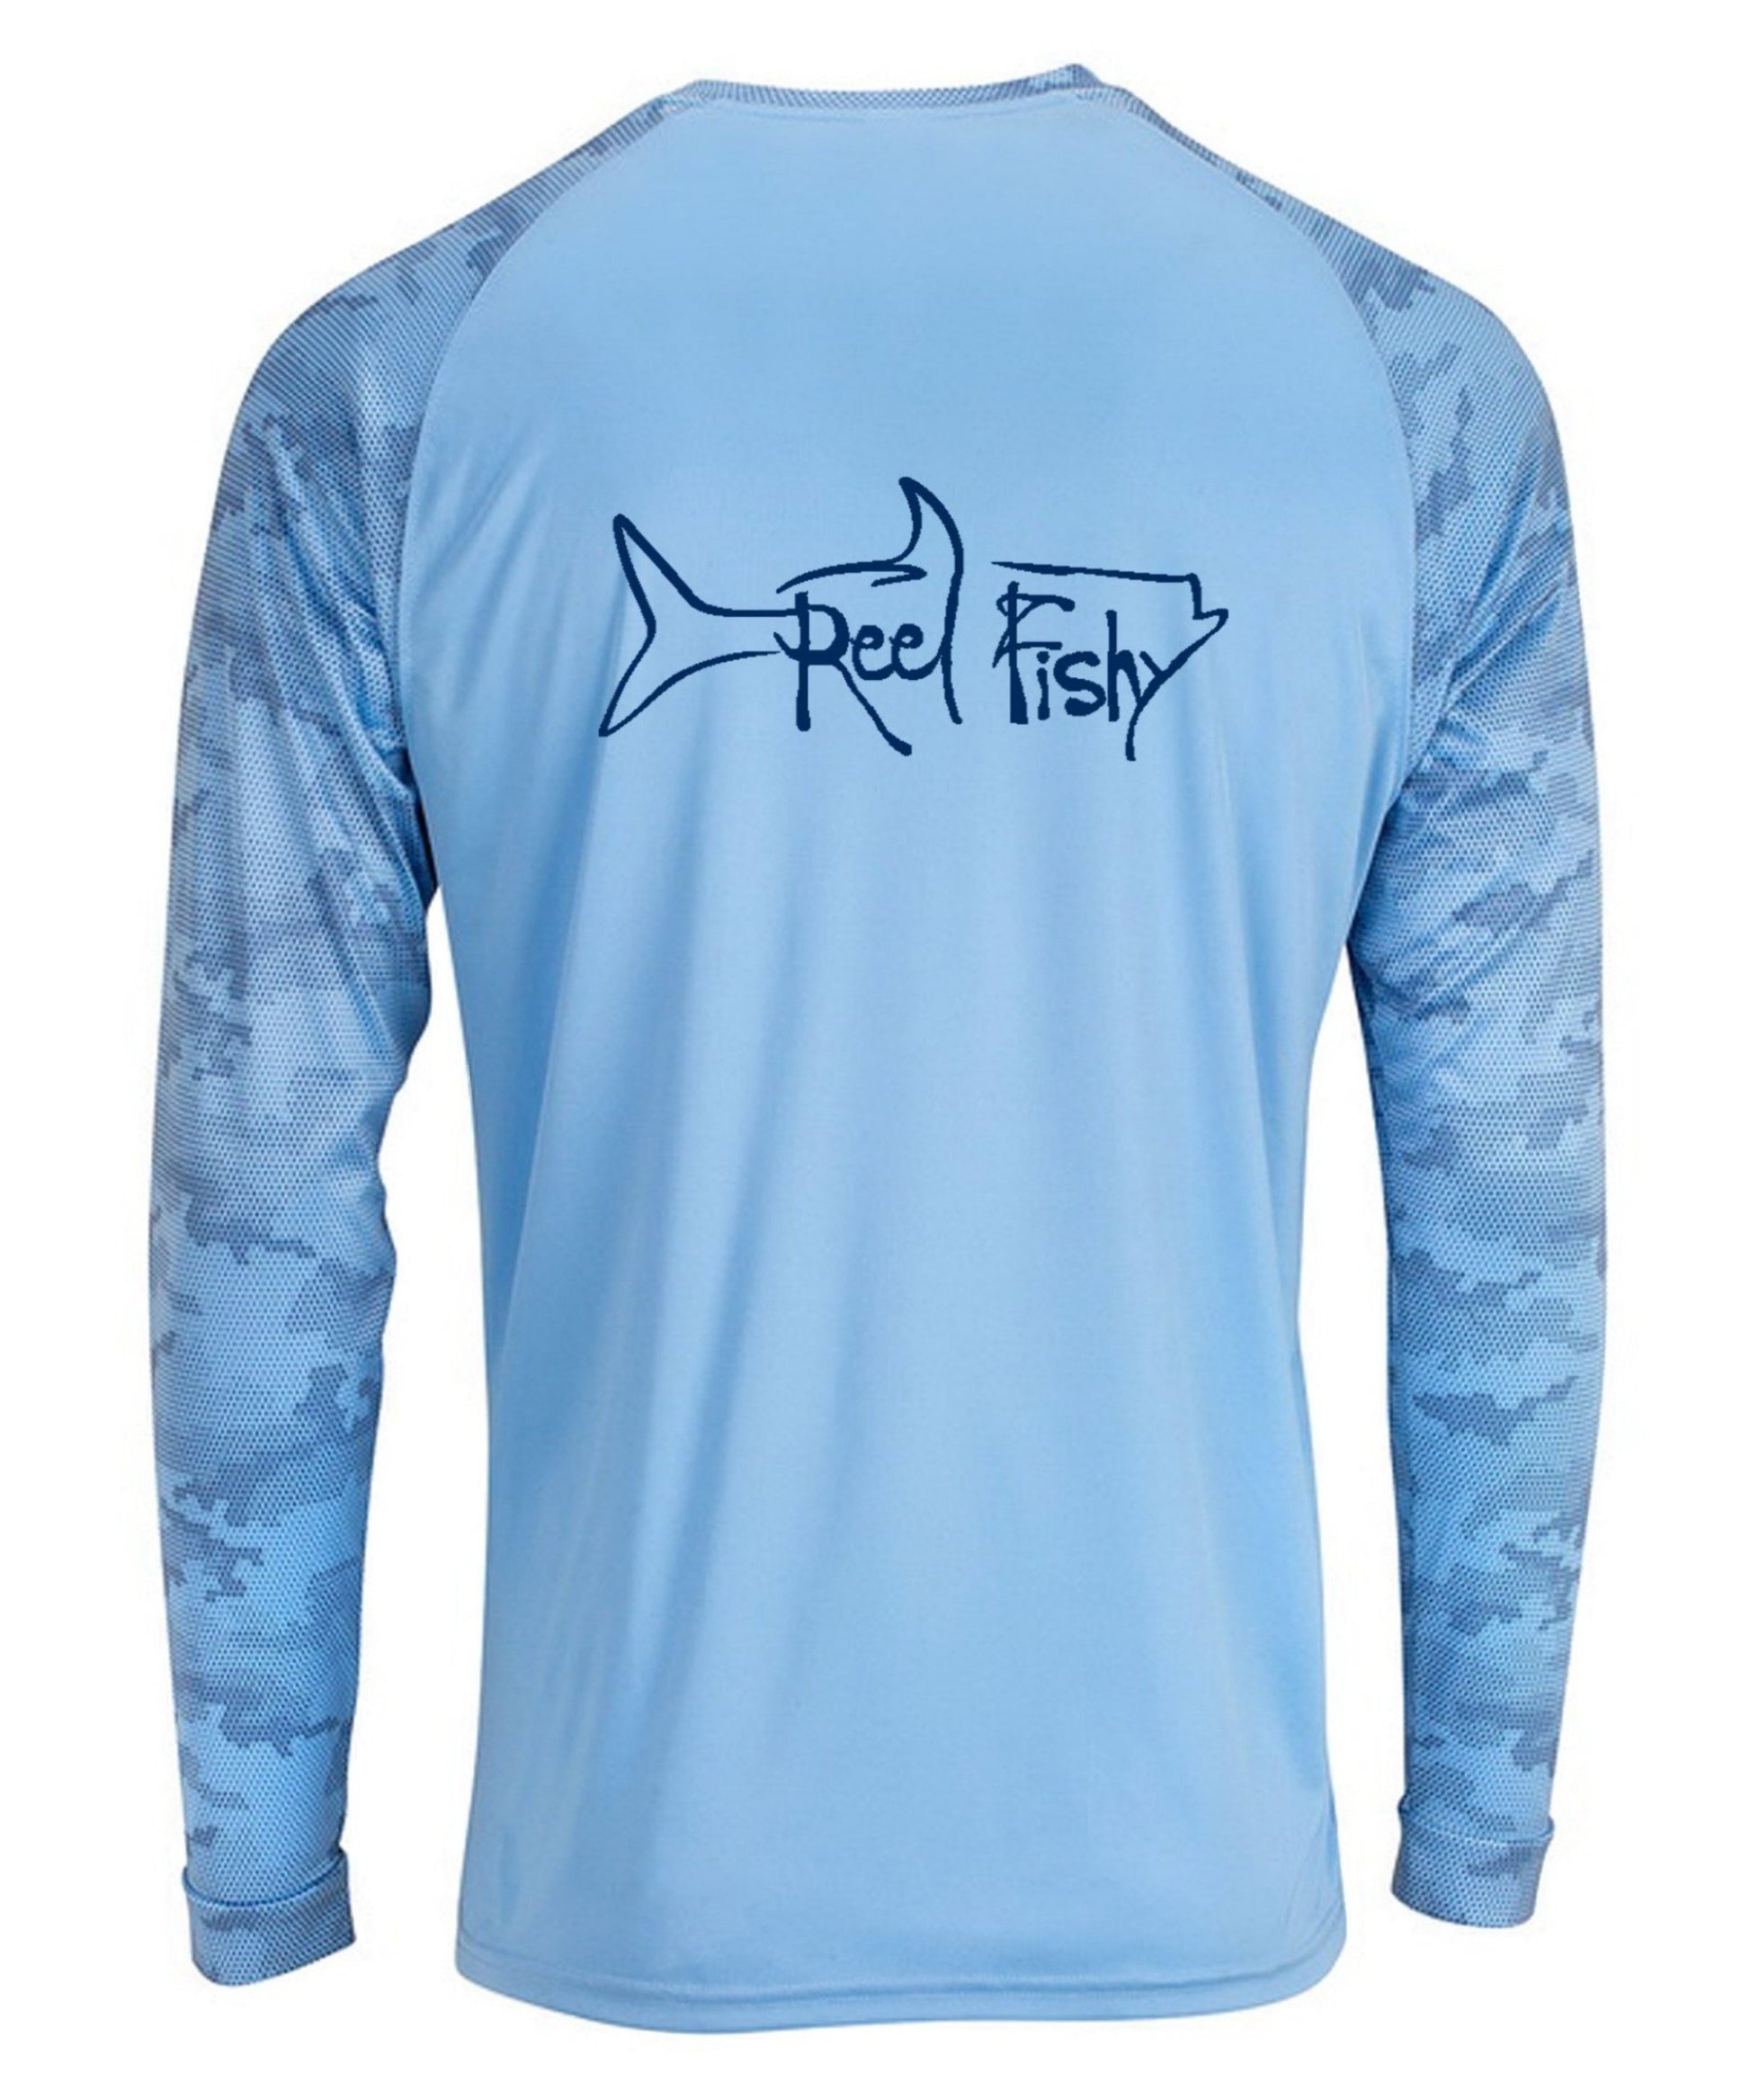 Tarpon Performance Digital Camo 50+uv Fishing Long Sleeve Shirts- Reel Fishy Apparel S / Blue Mist Camo - unisex